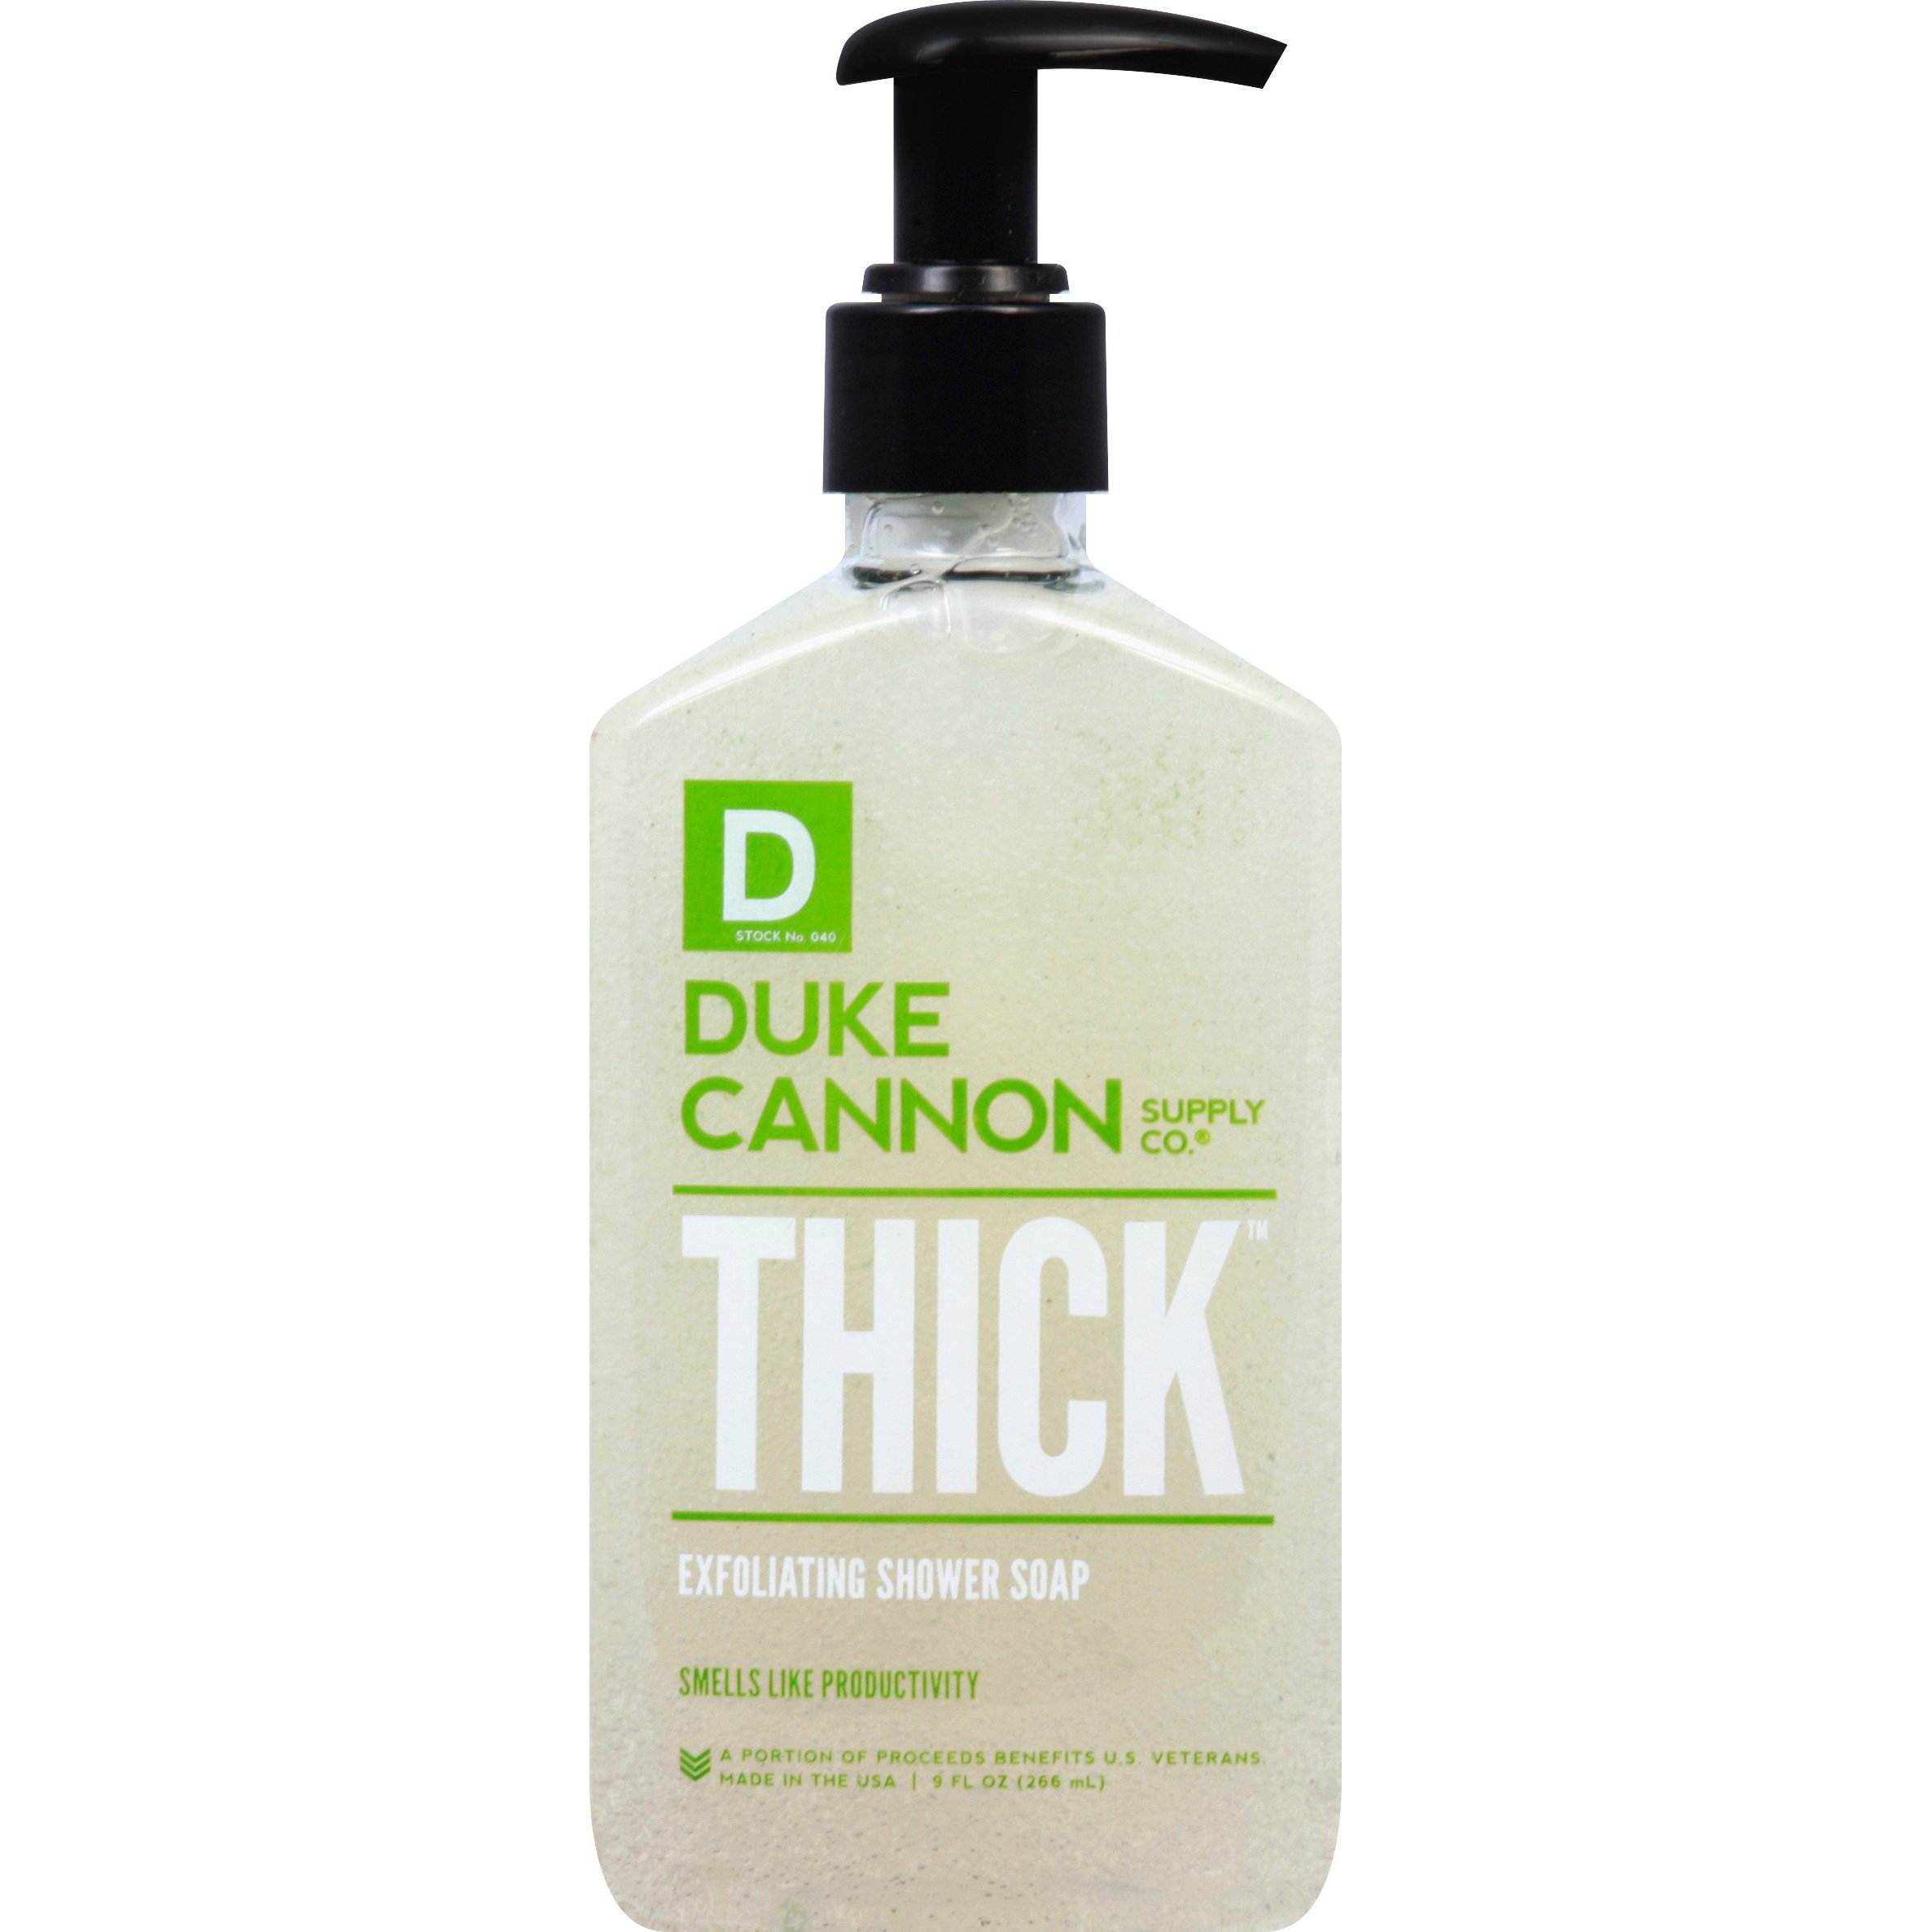 Duke Cannon Thick Exfoliating Shower Soap Productivity Shop Body Wash At H E B 